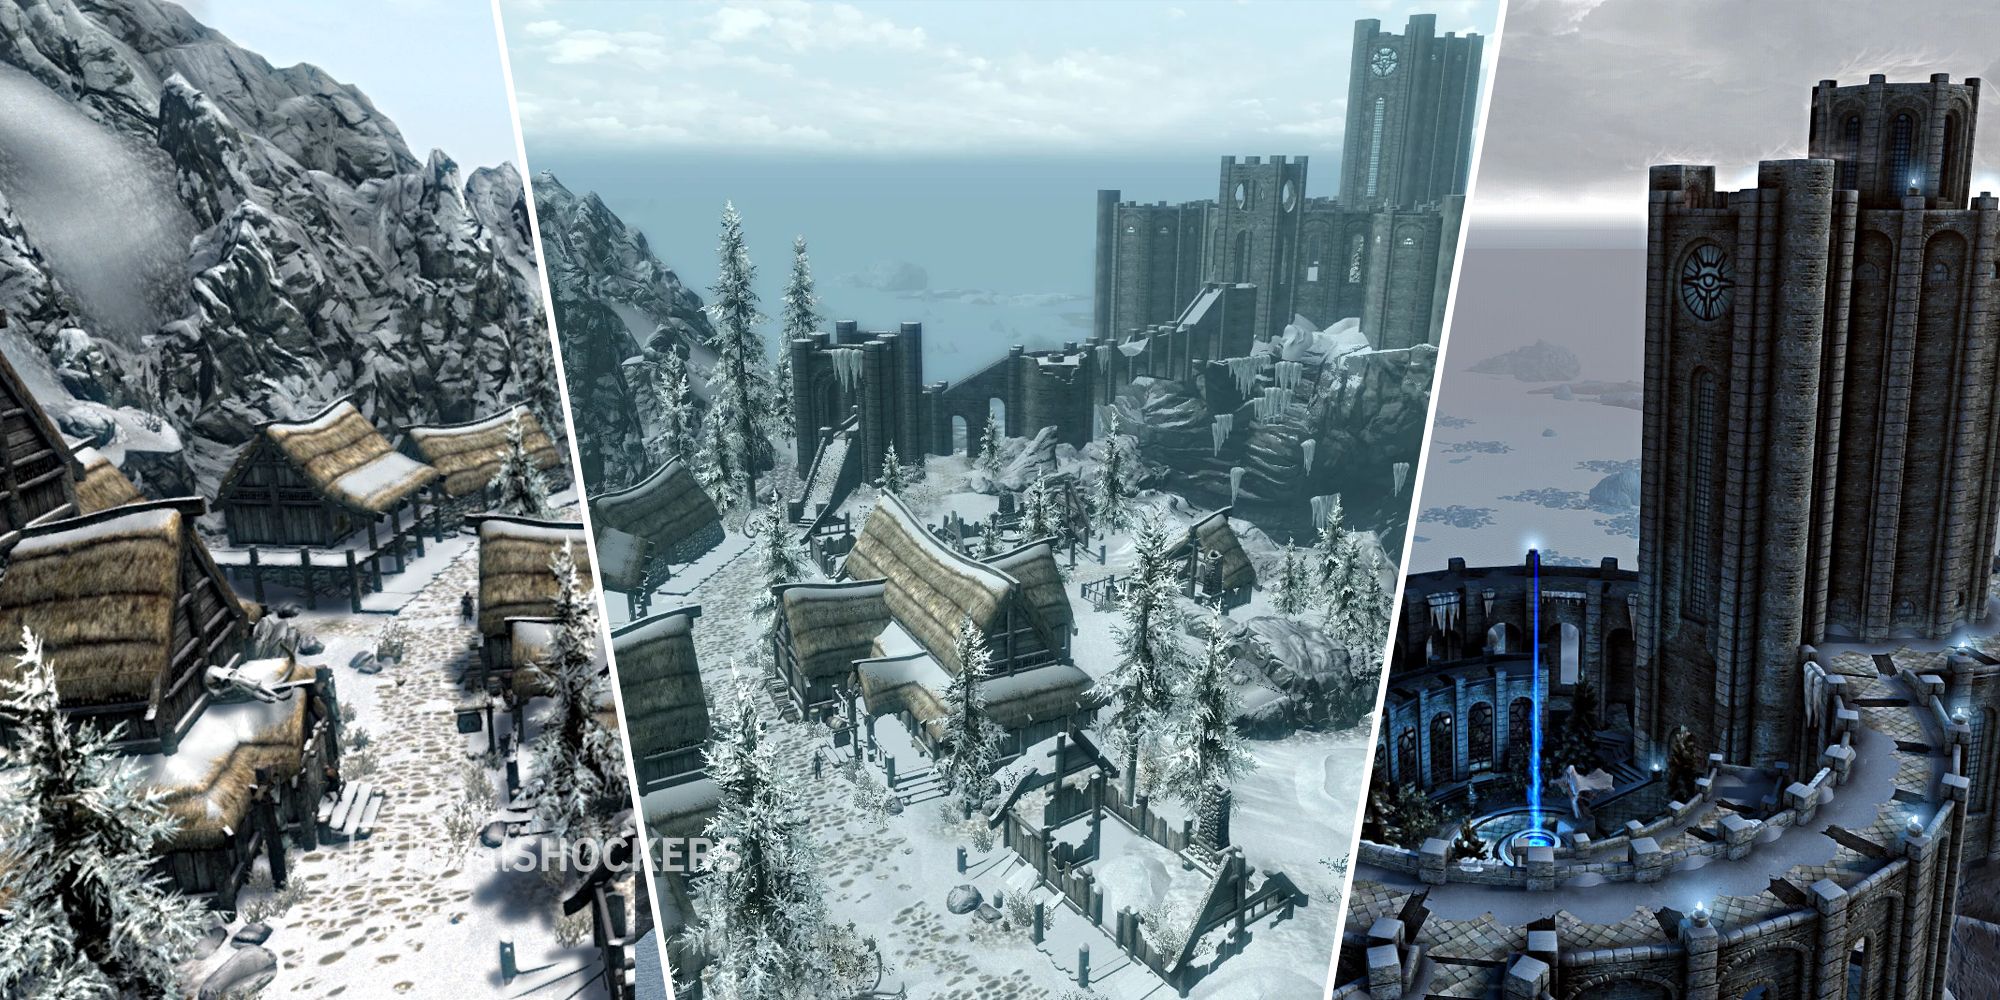 Elder Scrolls V Skyrim city of Winterhold and the College of Winterhold